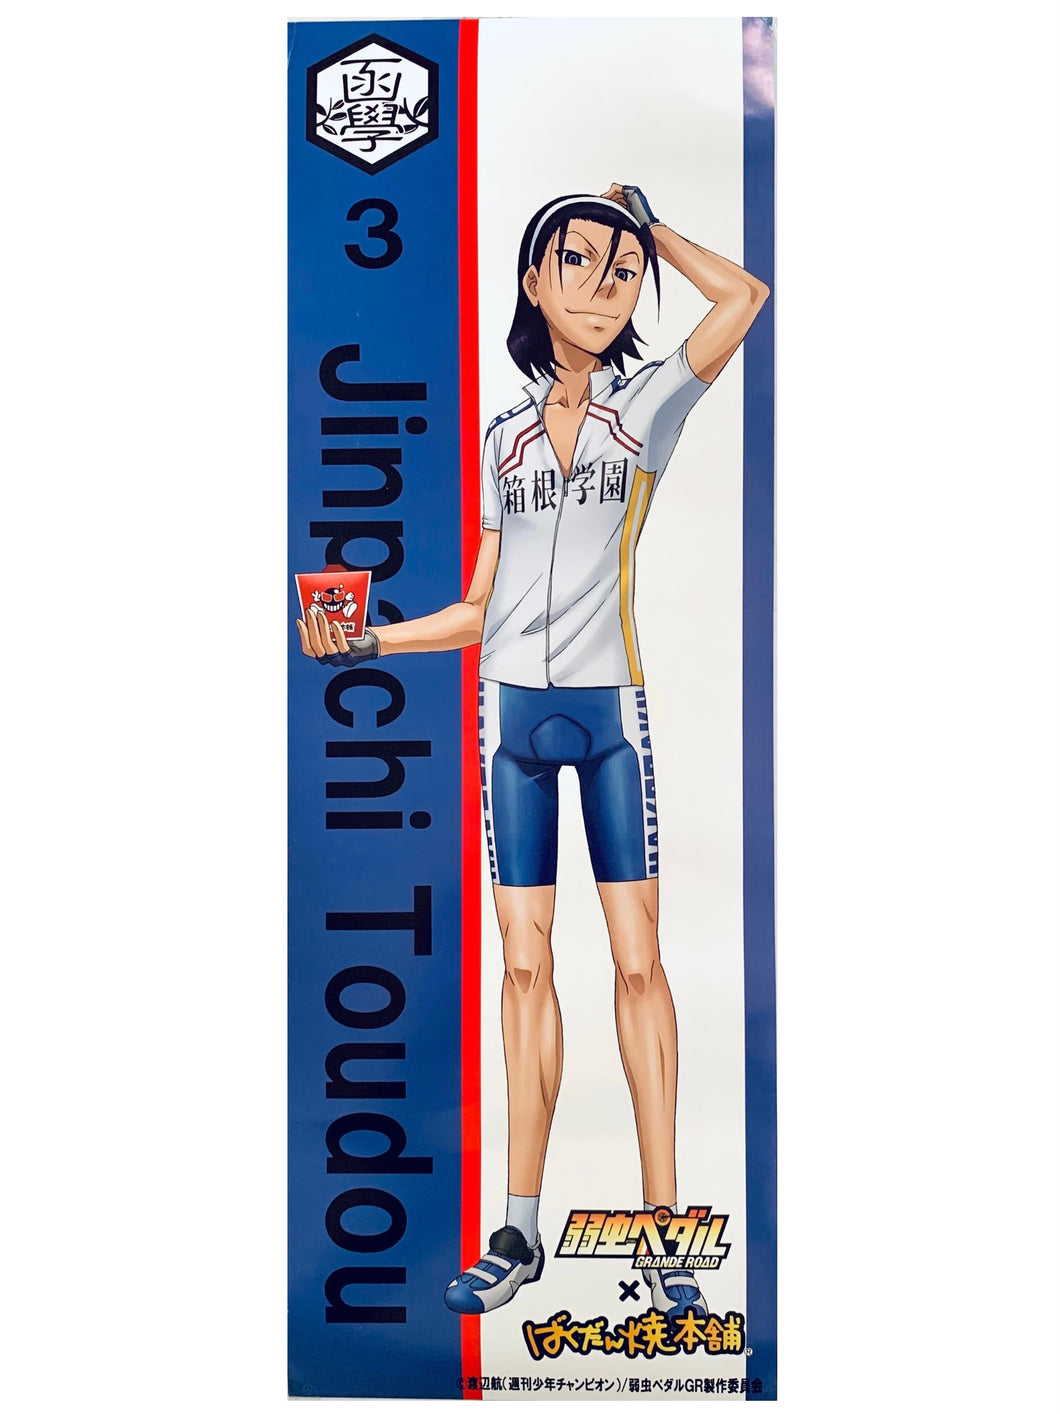 Yowamushi Pedal GRANDE ROAD
- Toudou Jinpachi - Yowapeda x Bakudan Yaki Honpo Poster Set